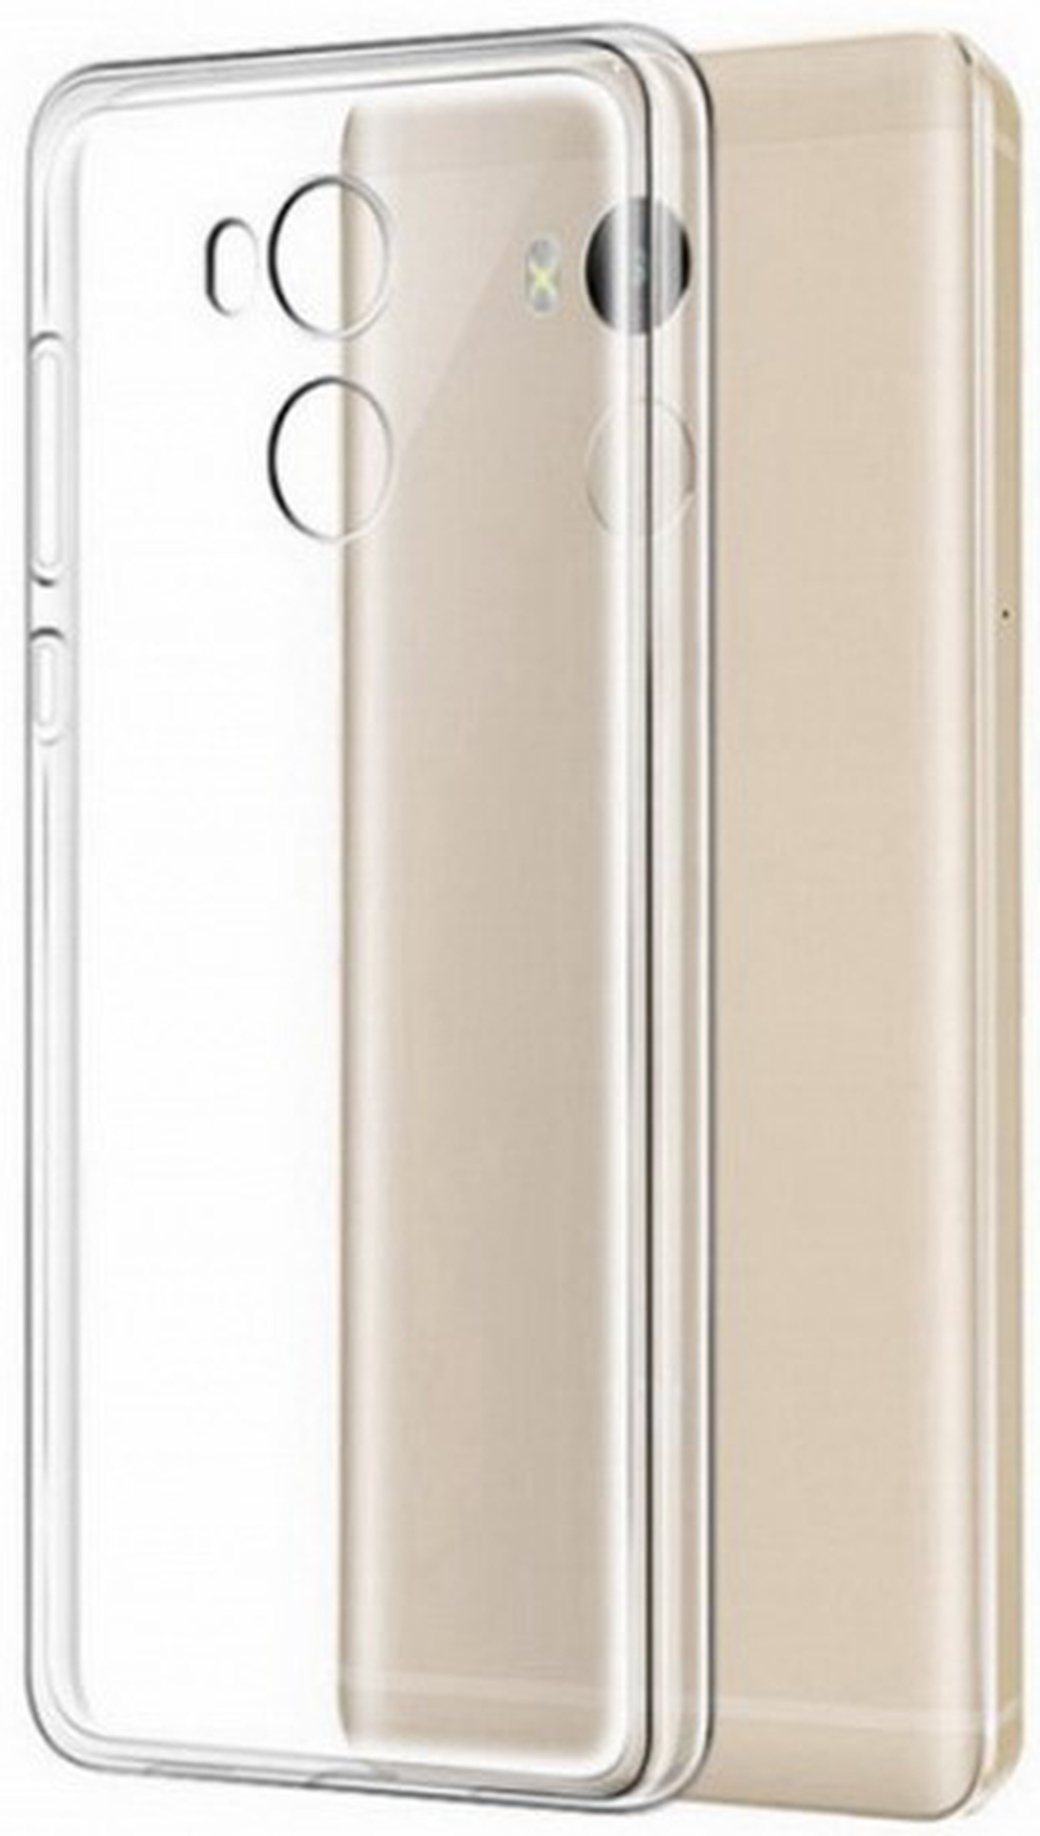 Чехол для смартфона Xiaomi Redmi 4 Silicone iBox Crystal (прозрачный), Dismac фото